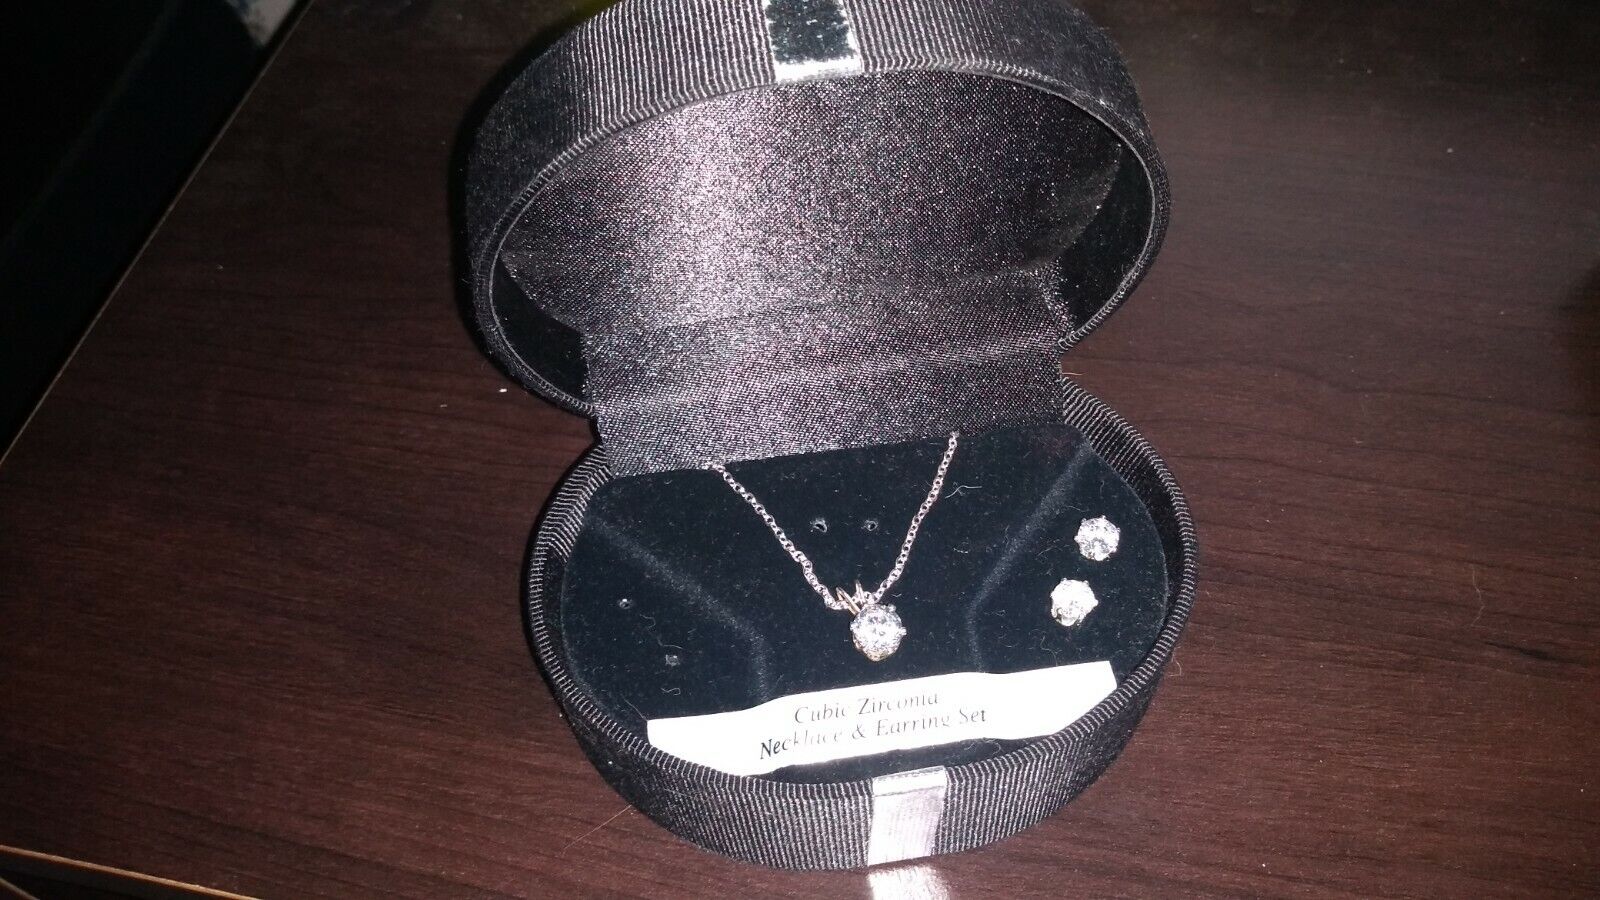 2 karat cubic zirconia necklace and earring set